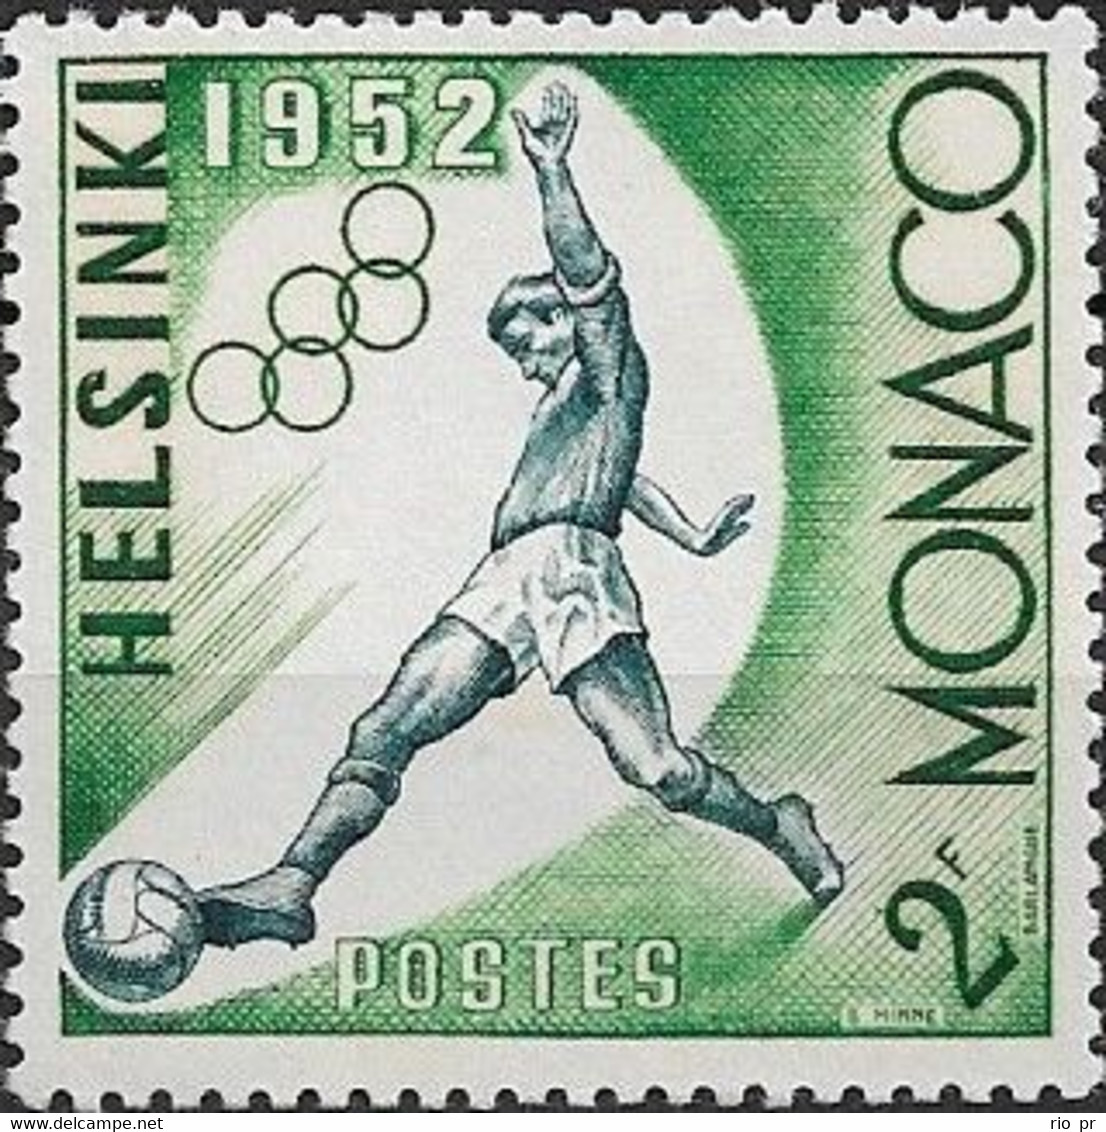 MONACO - HELSINKI'52 SUMMER OLYMPIC GAMES (SOCCER, 2 Fr) 1953 - MNH - Verano 1952: Helsinki